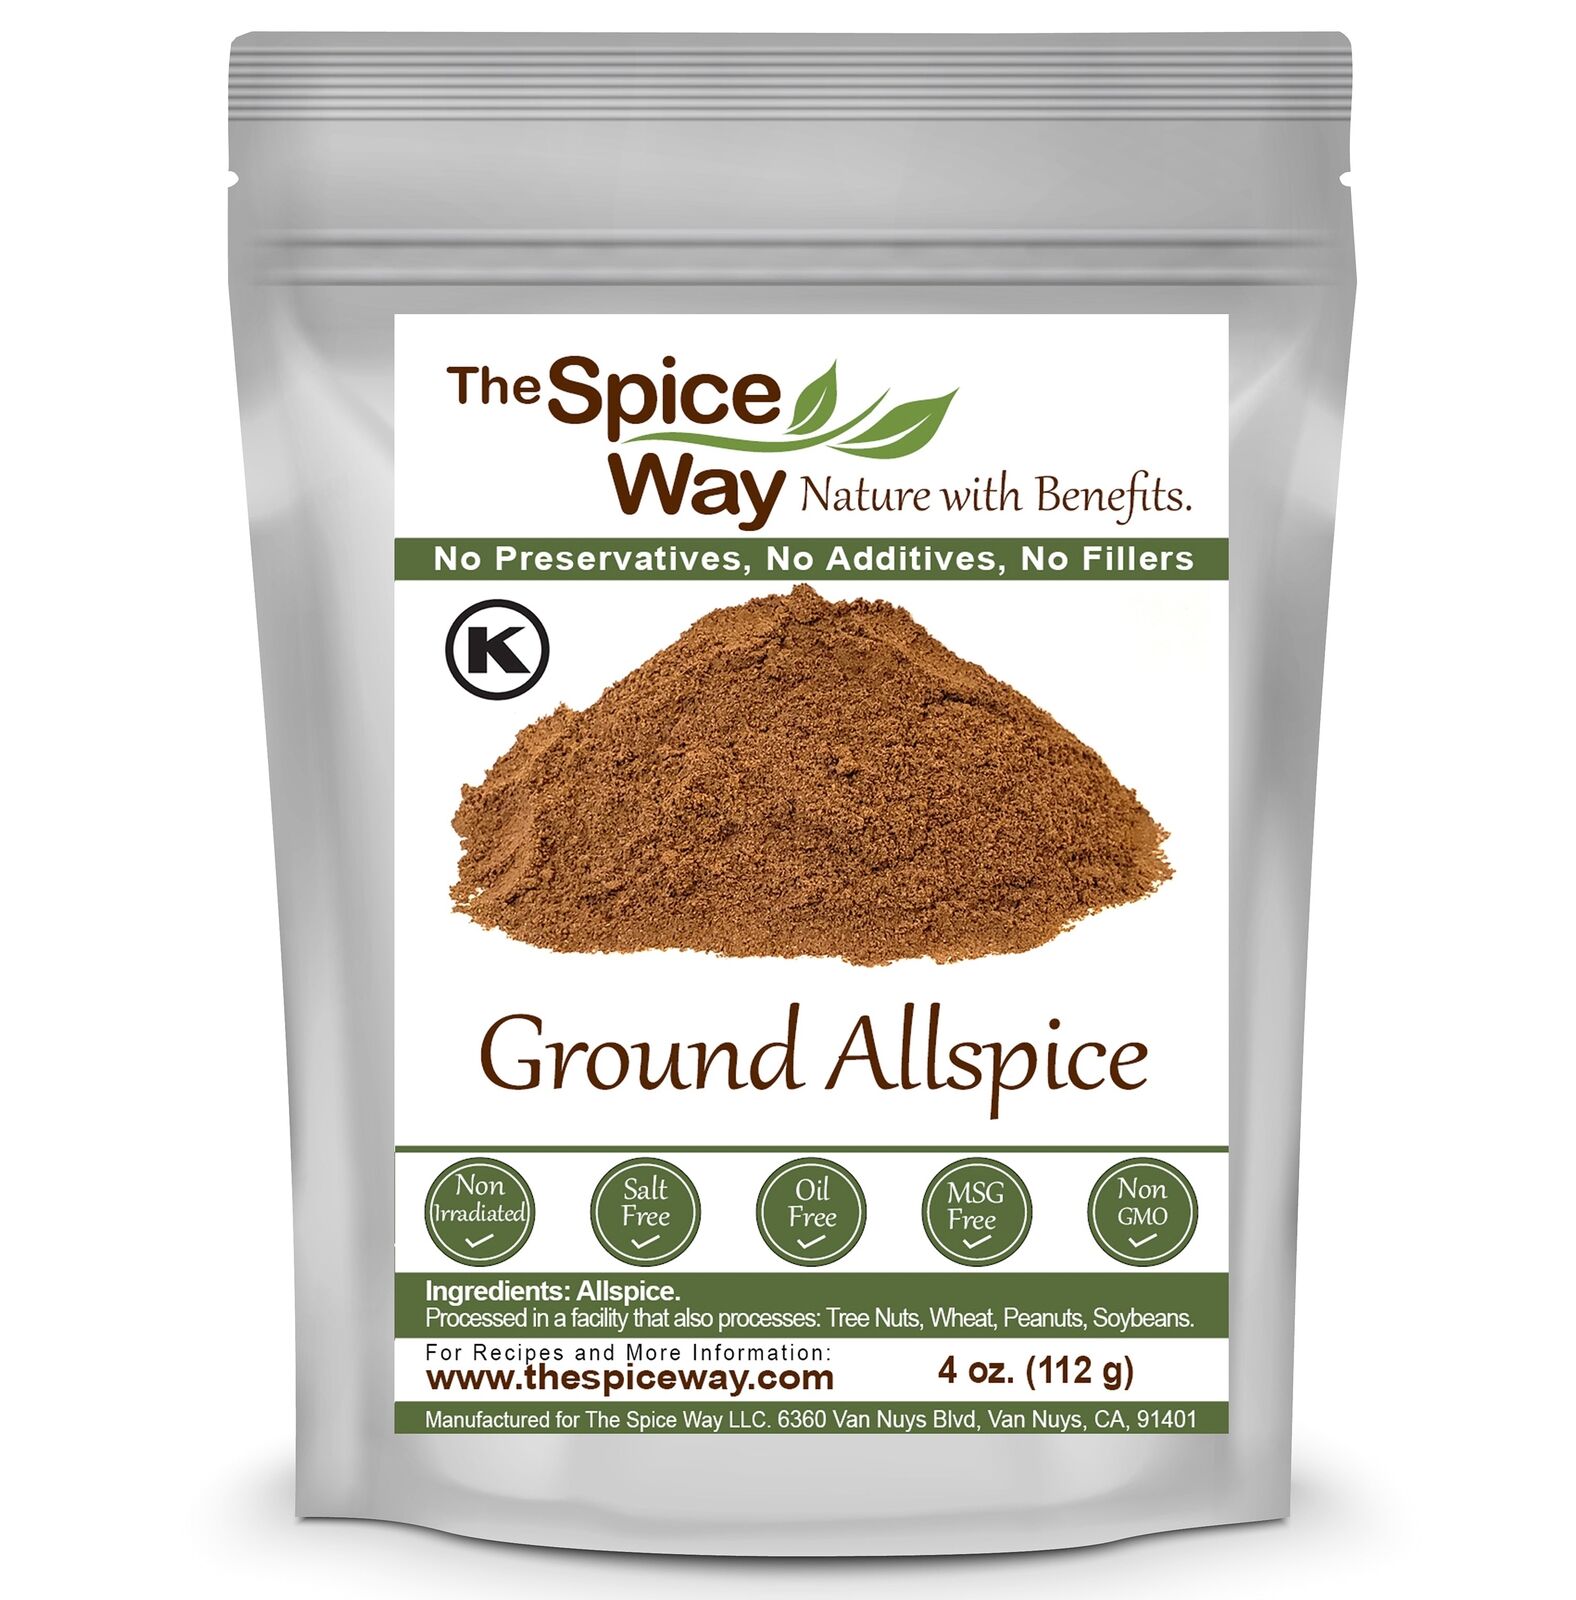 The Spice Way Allspice Ground